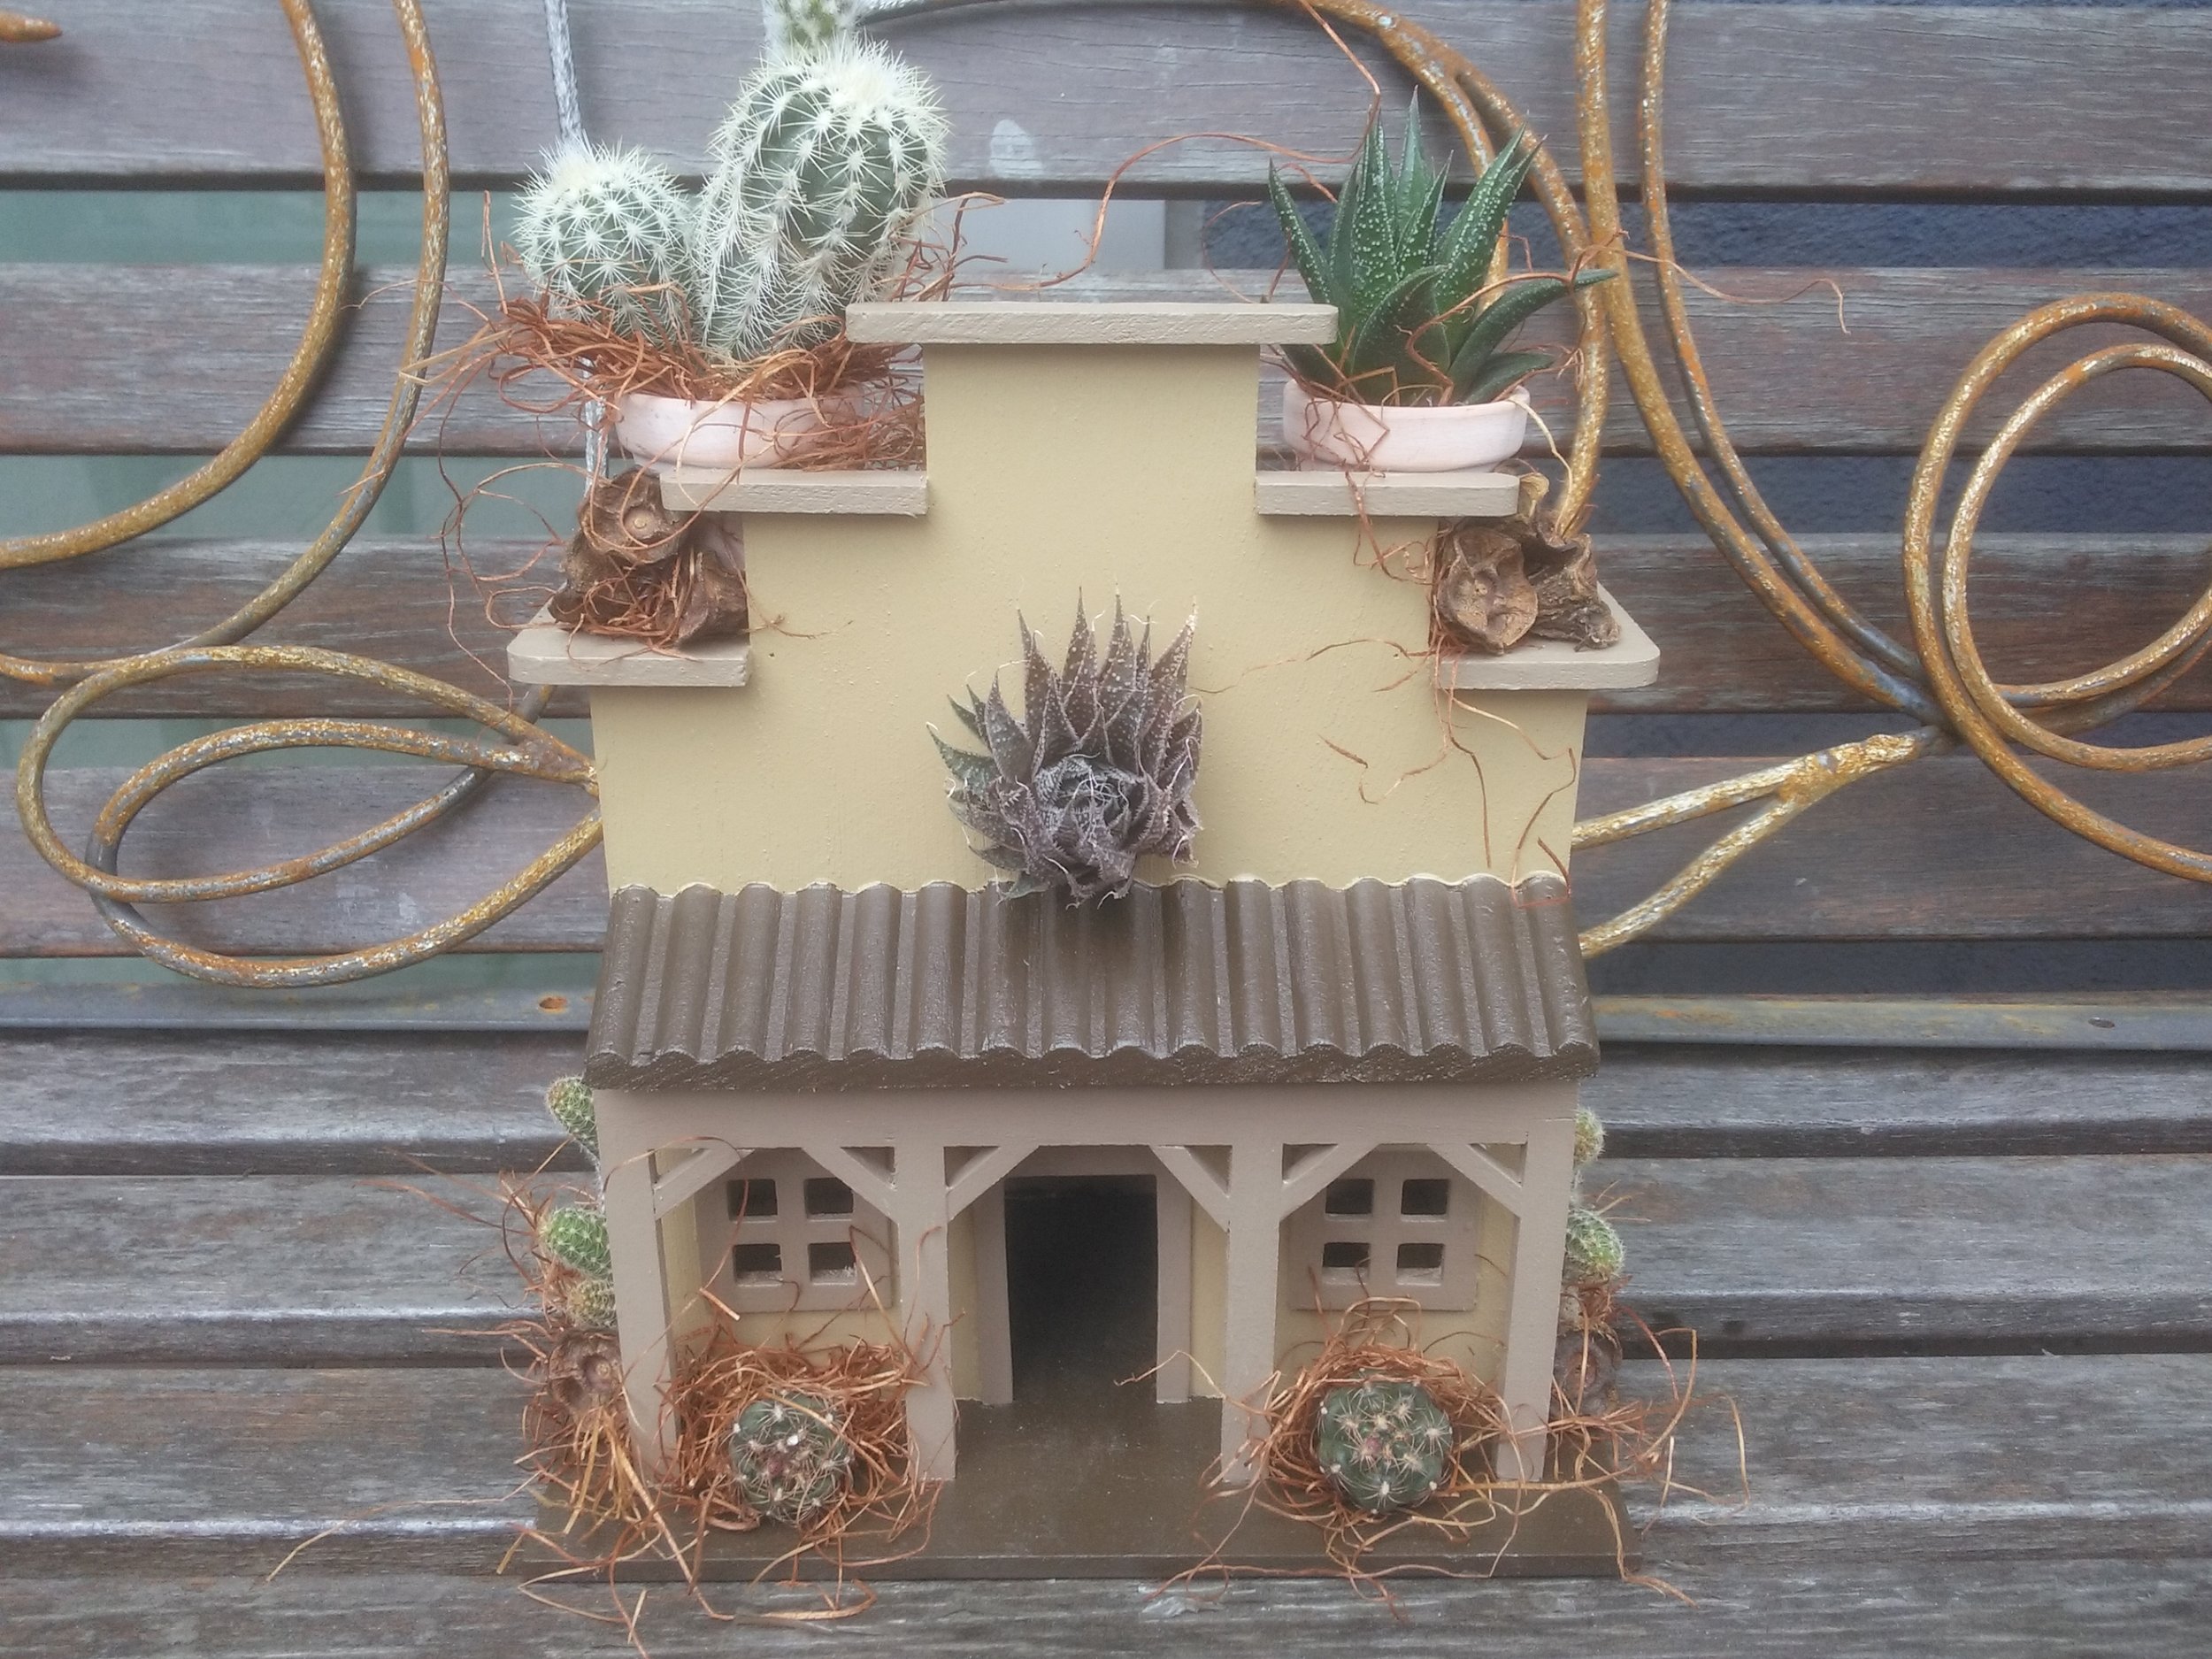 Western Birdhouse with Succulents.jpg